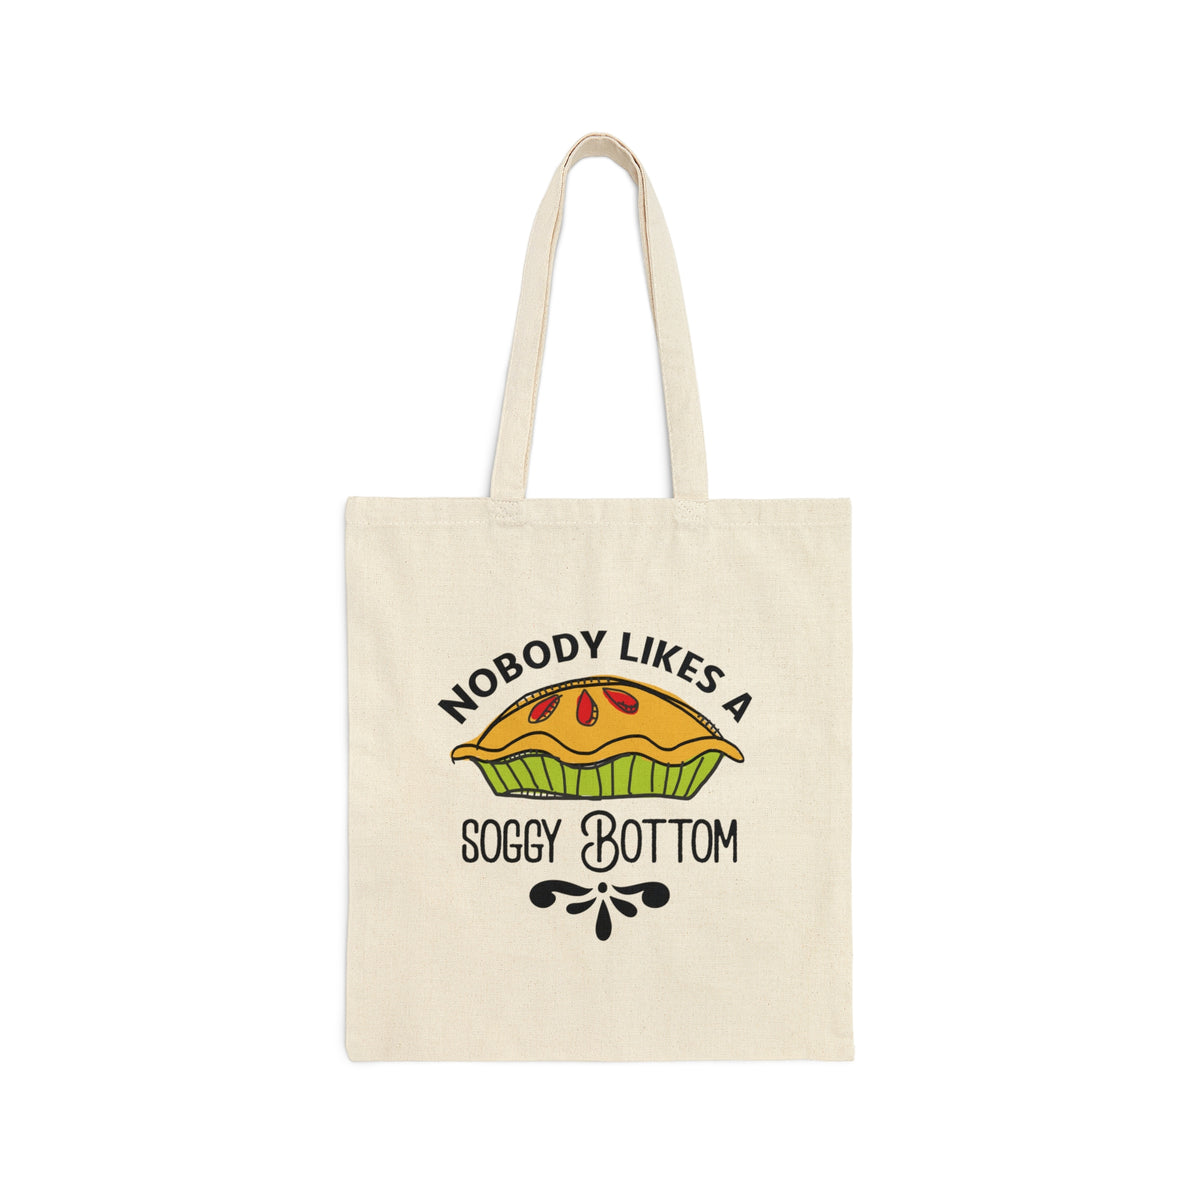 Soggy Bottom British Baking Tote Bag | Baker Gifts | Canvas Tote Bag